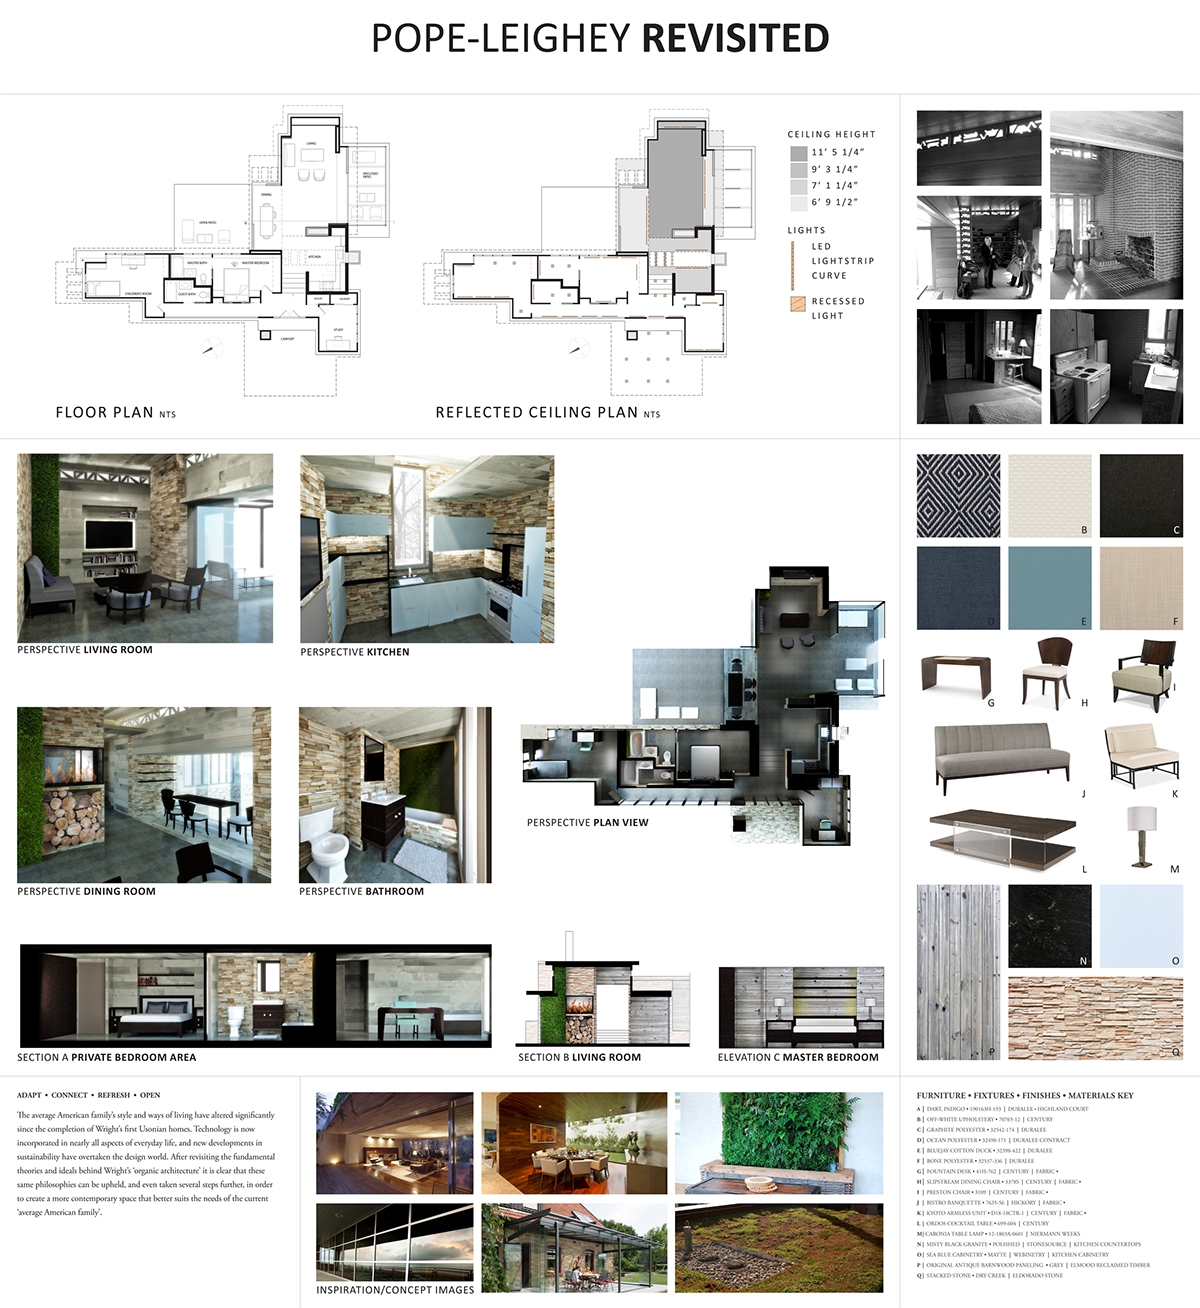 flv Frank Lloyd Wright popeleigeyhouse redesign reenvisioning greenlivingwall usonianhouse residential madeinamerica